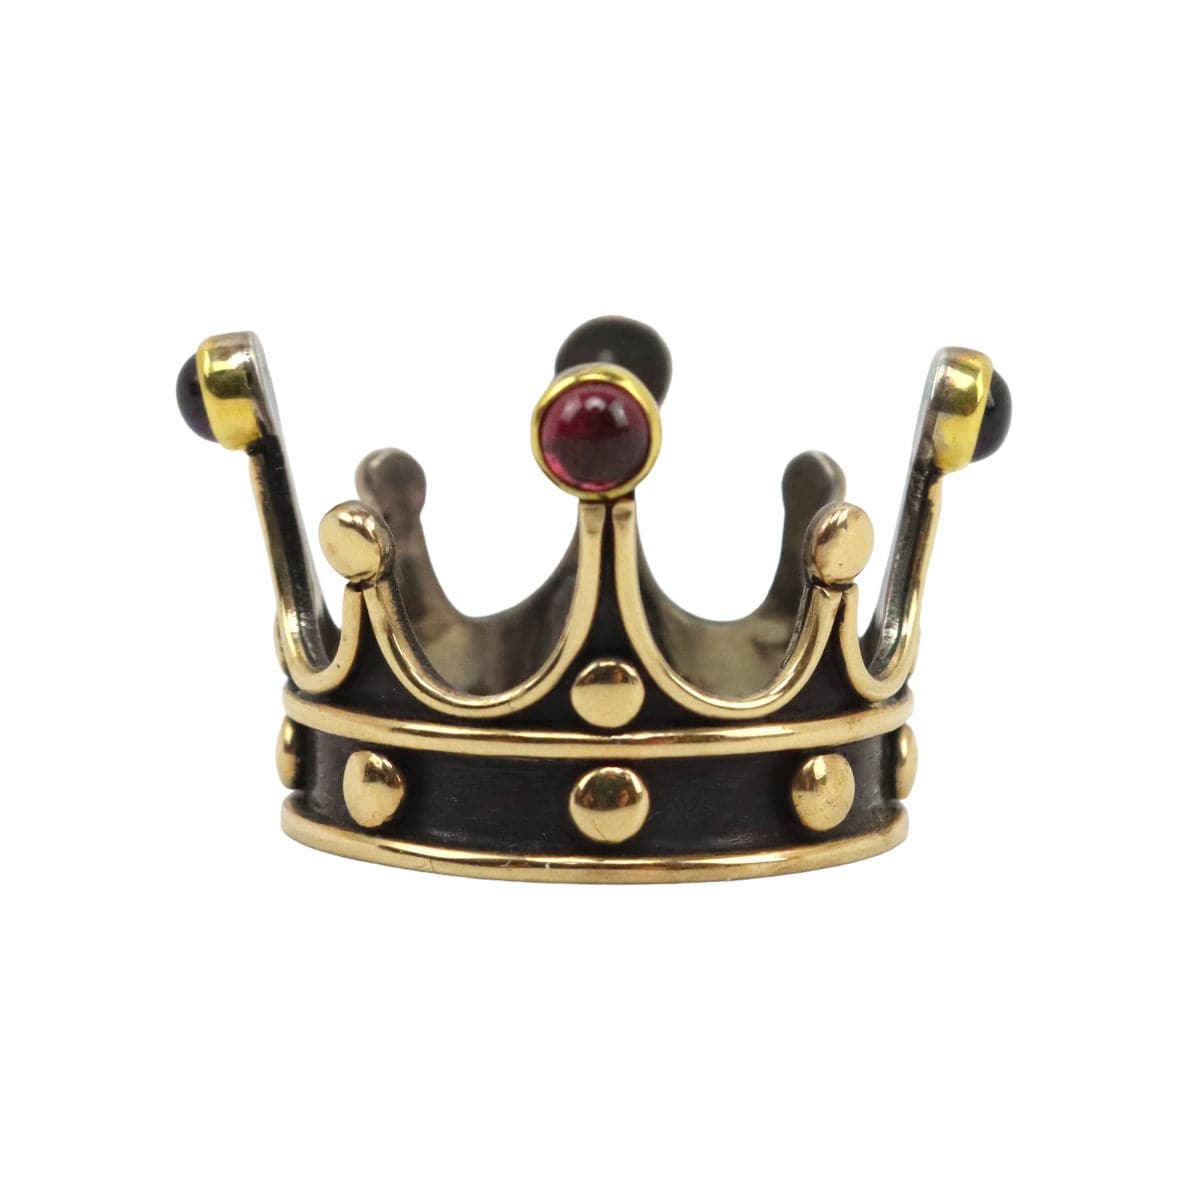 Frank Patania Jr. - Garnet, 14K Gold, and Silver Crown, 0.75" x 1" (J91699-1222-035)
 2